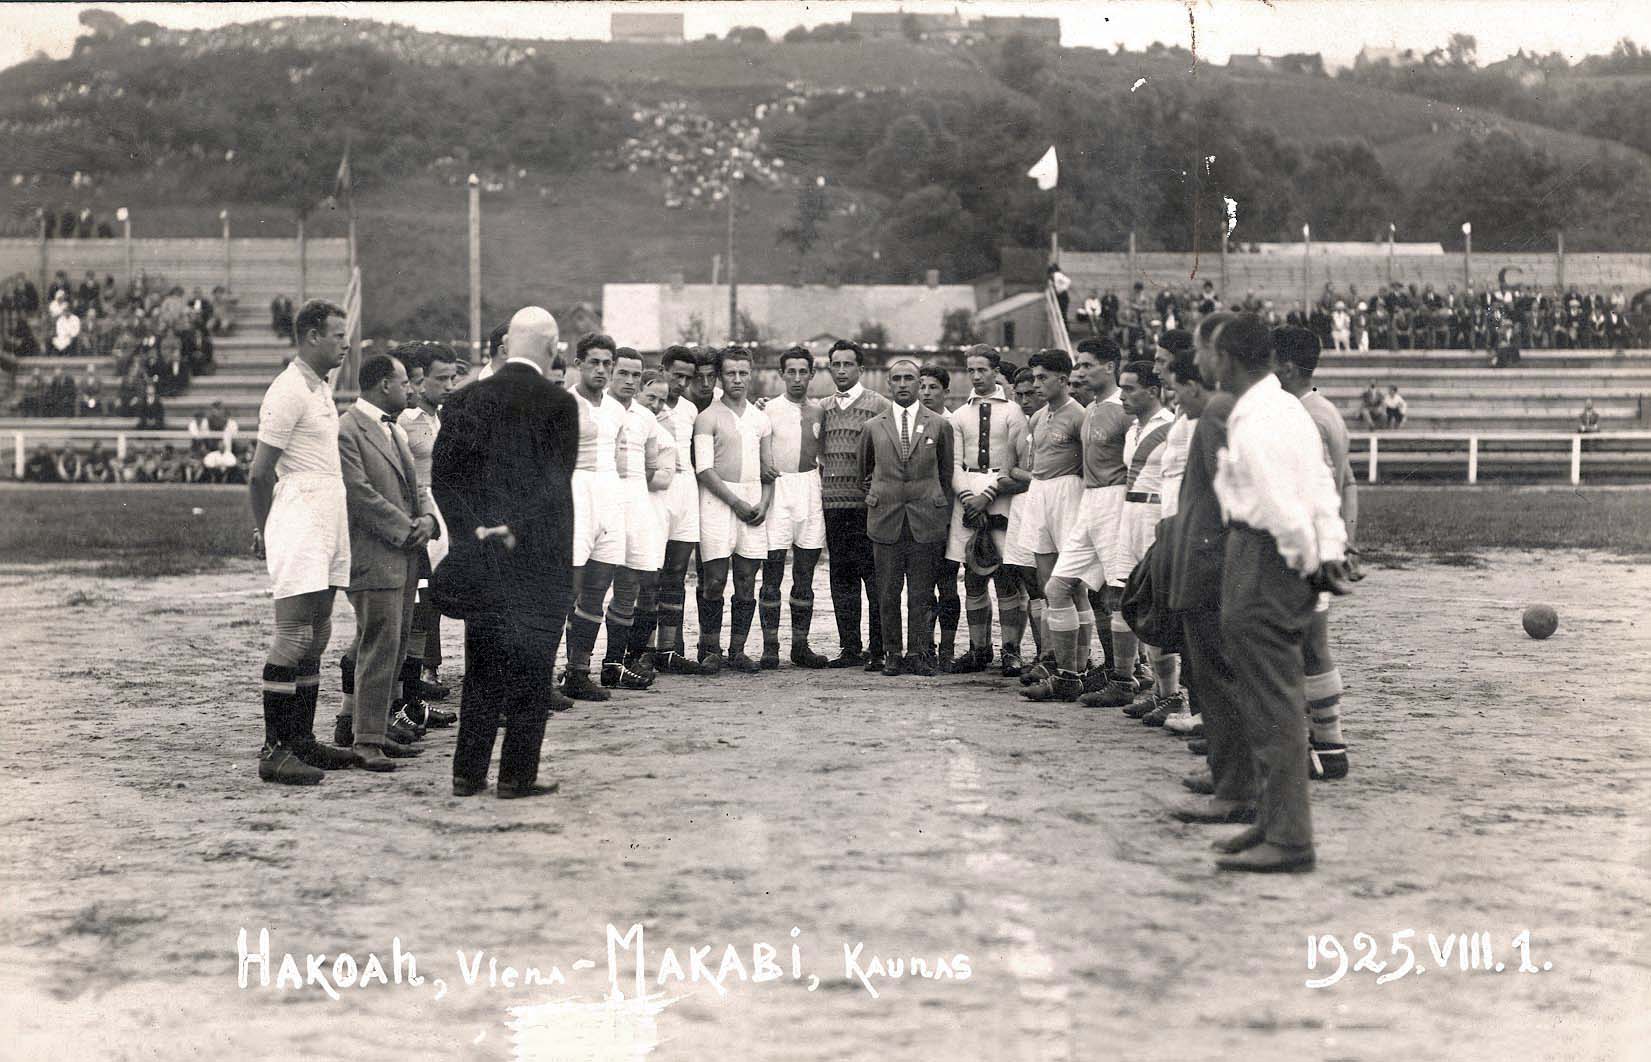 Kaunas, Lithuania, a football match between "Hakoach" Vienna and the local "Maccabi" team, 01/08/1925